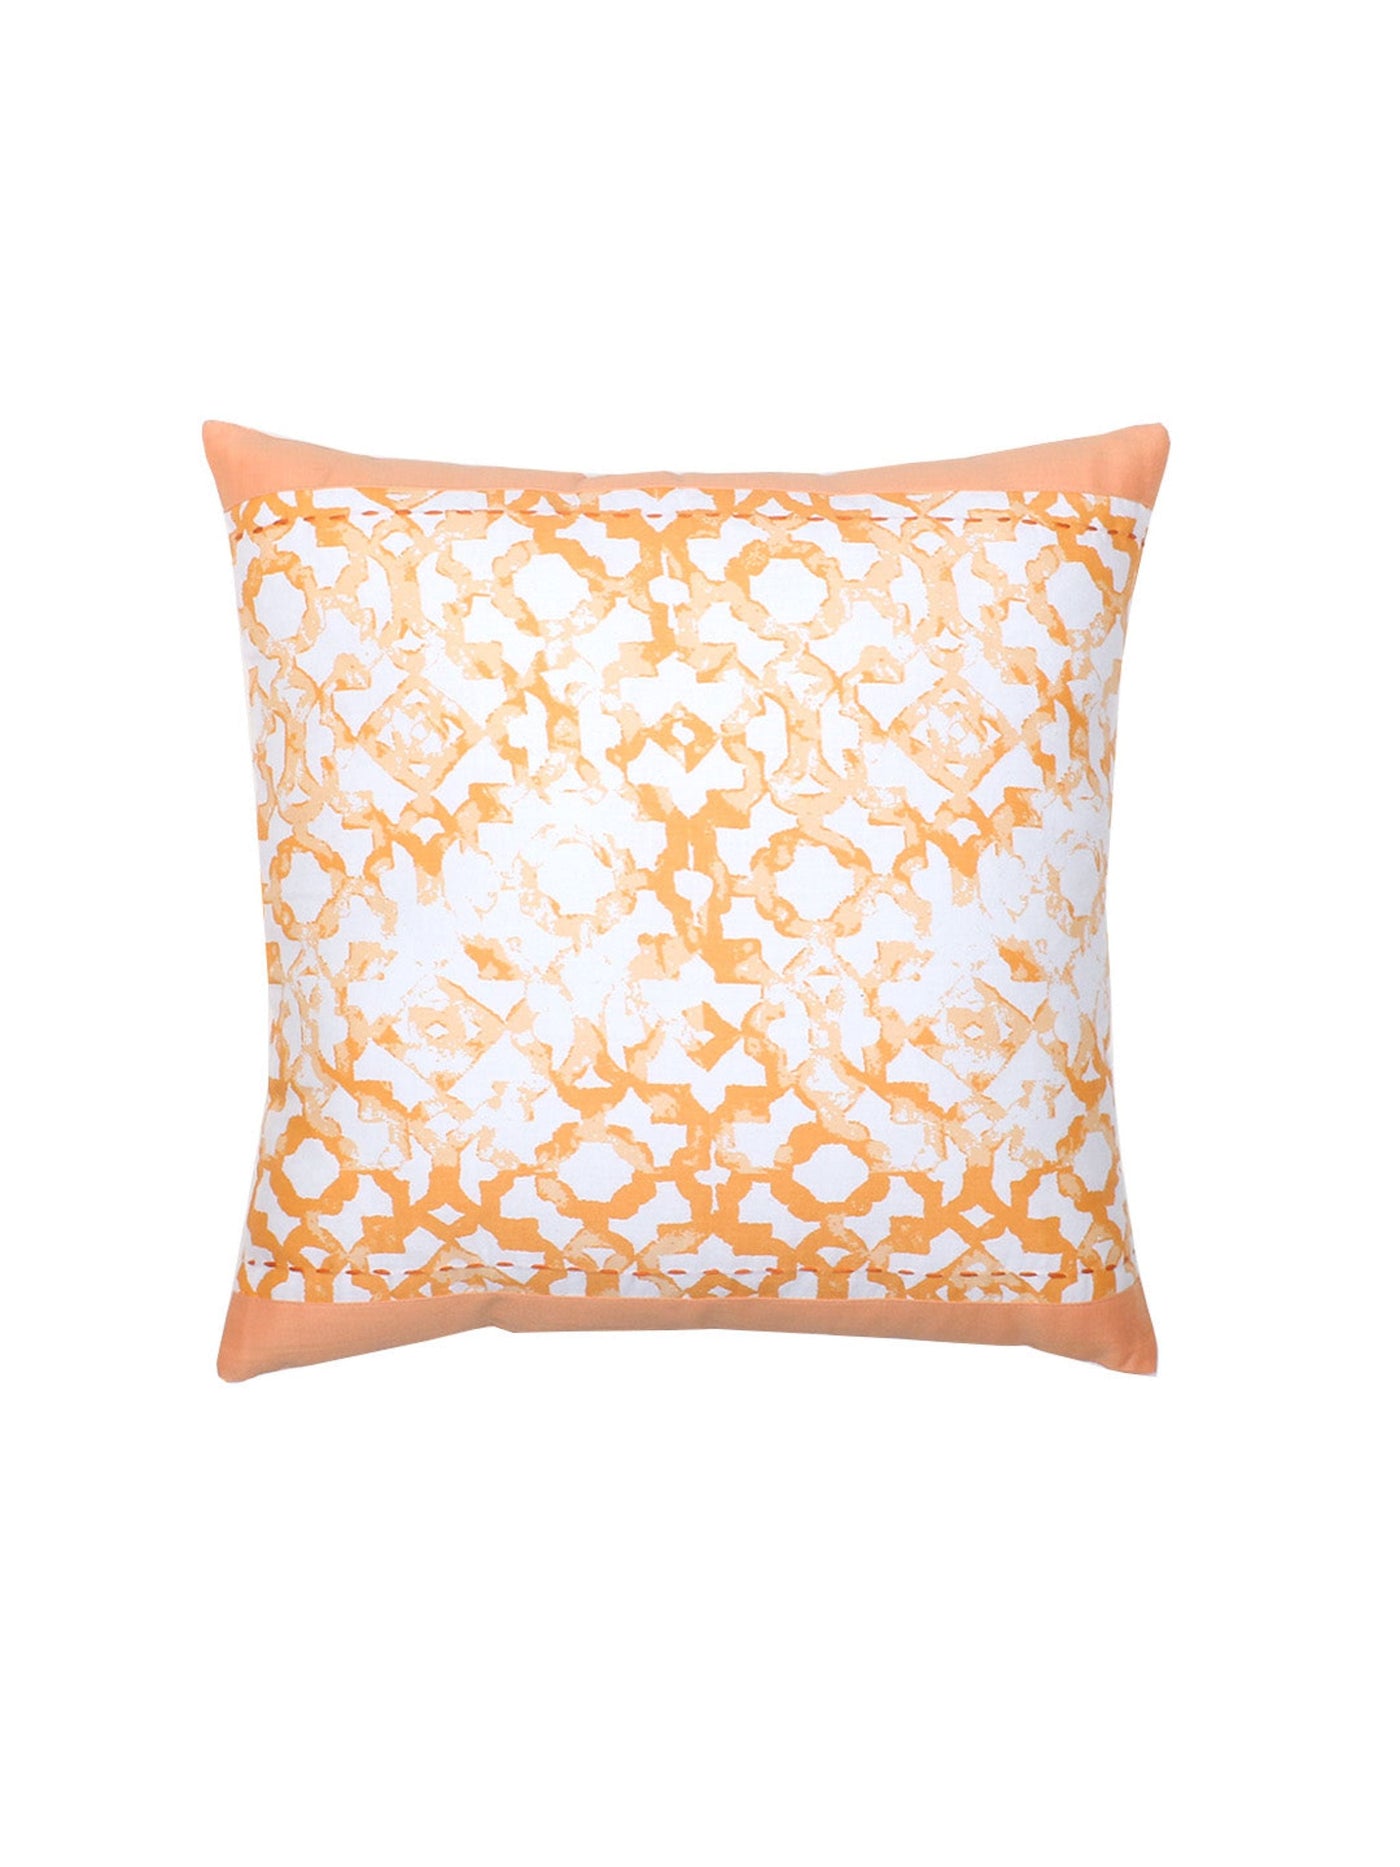 Cushion Cover - Jaali (Orange)